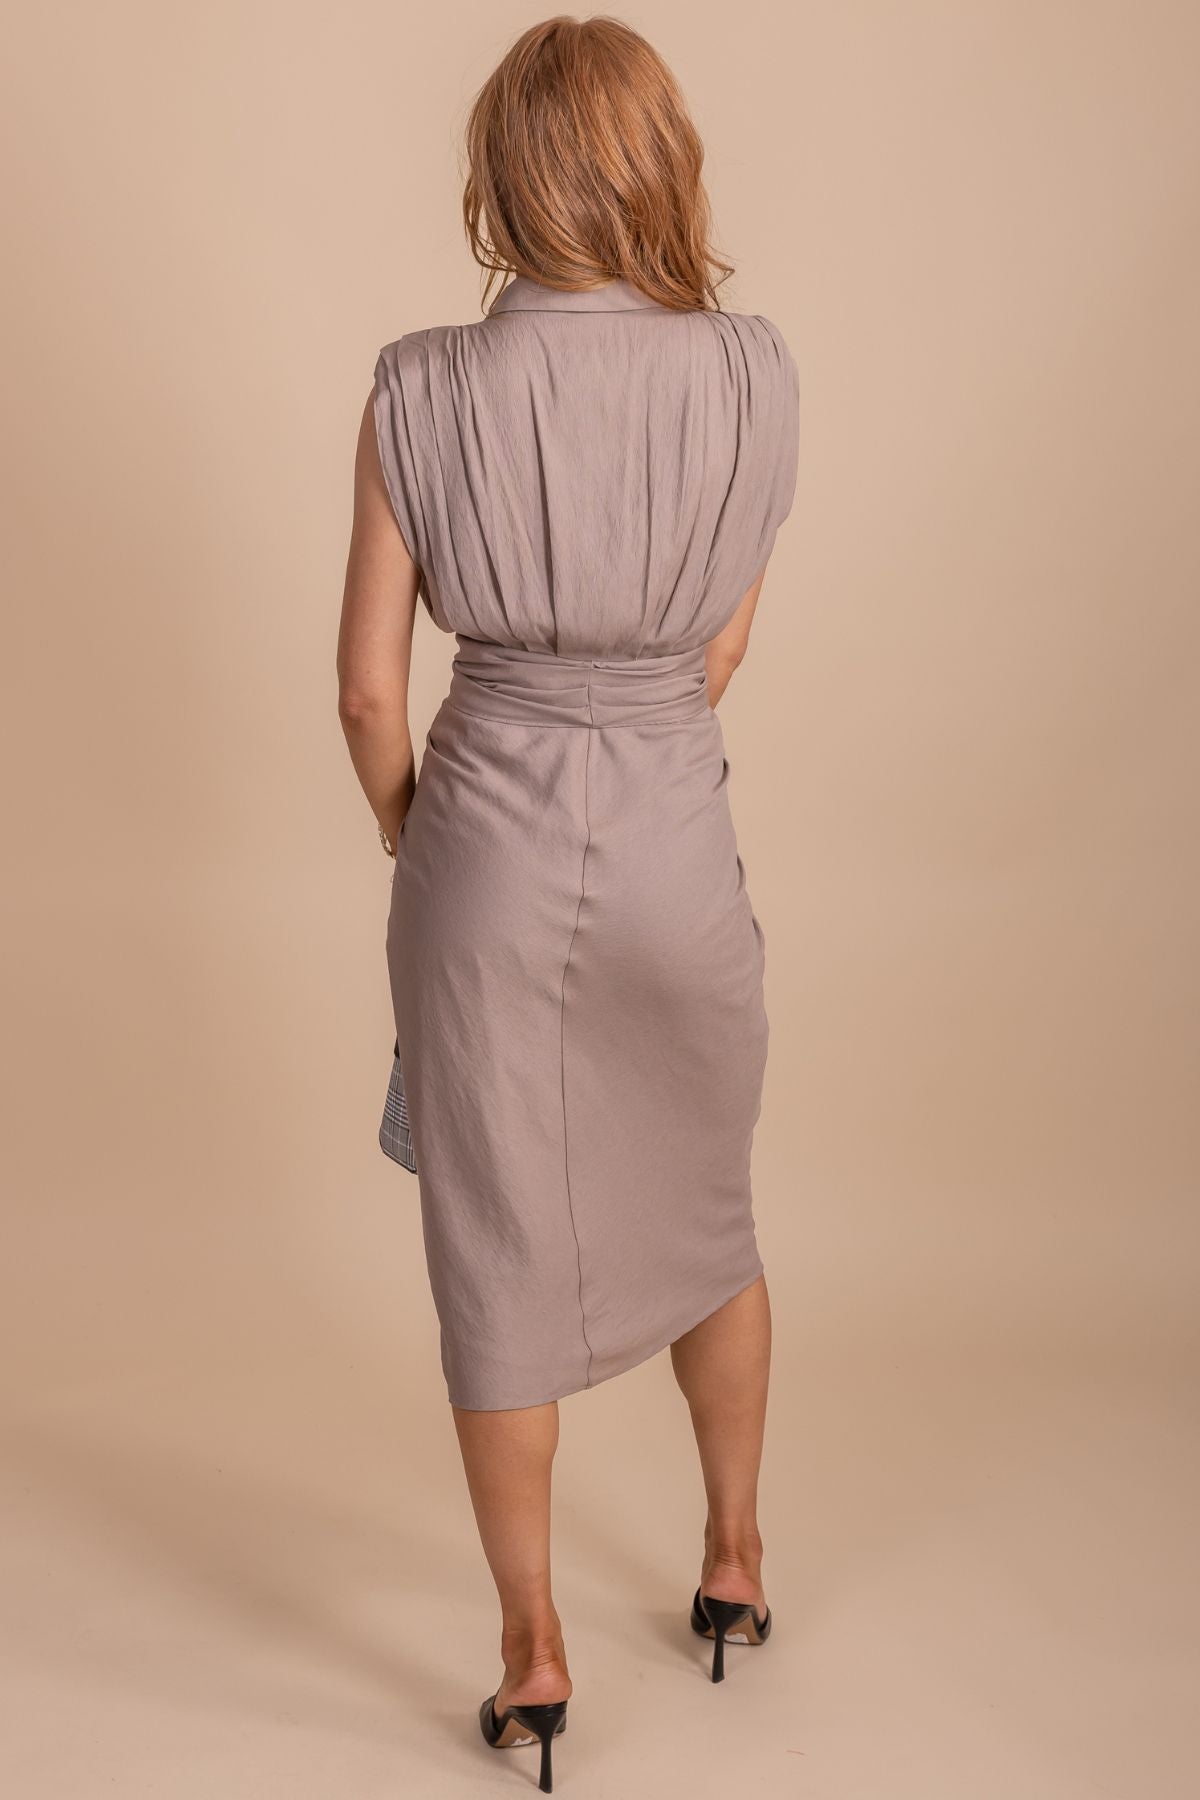 Brown Waist Tie Detail Boutique Knee-Length Dresses for Women